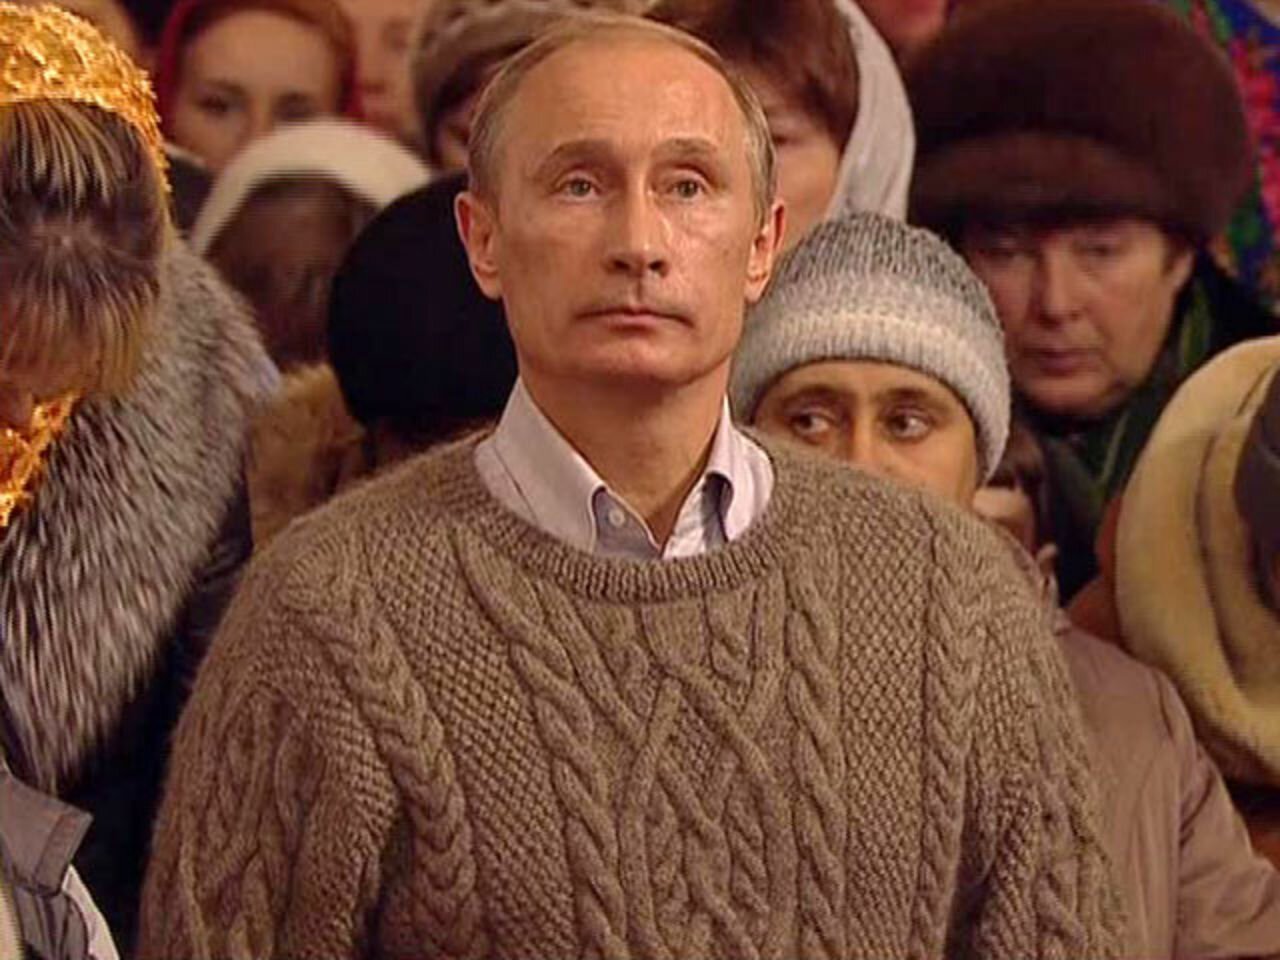 Никого не жалко никого ни тебя. Свитер Путина. Свитер Путина на Рождество.